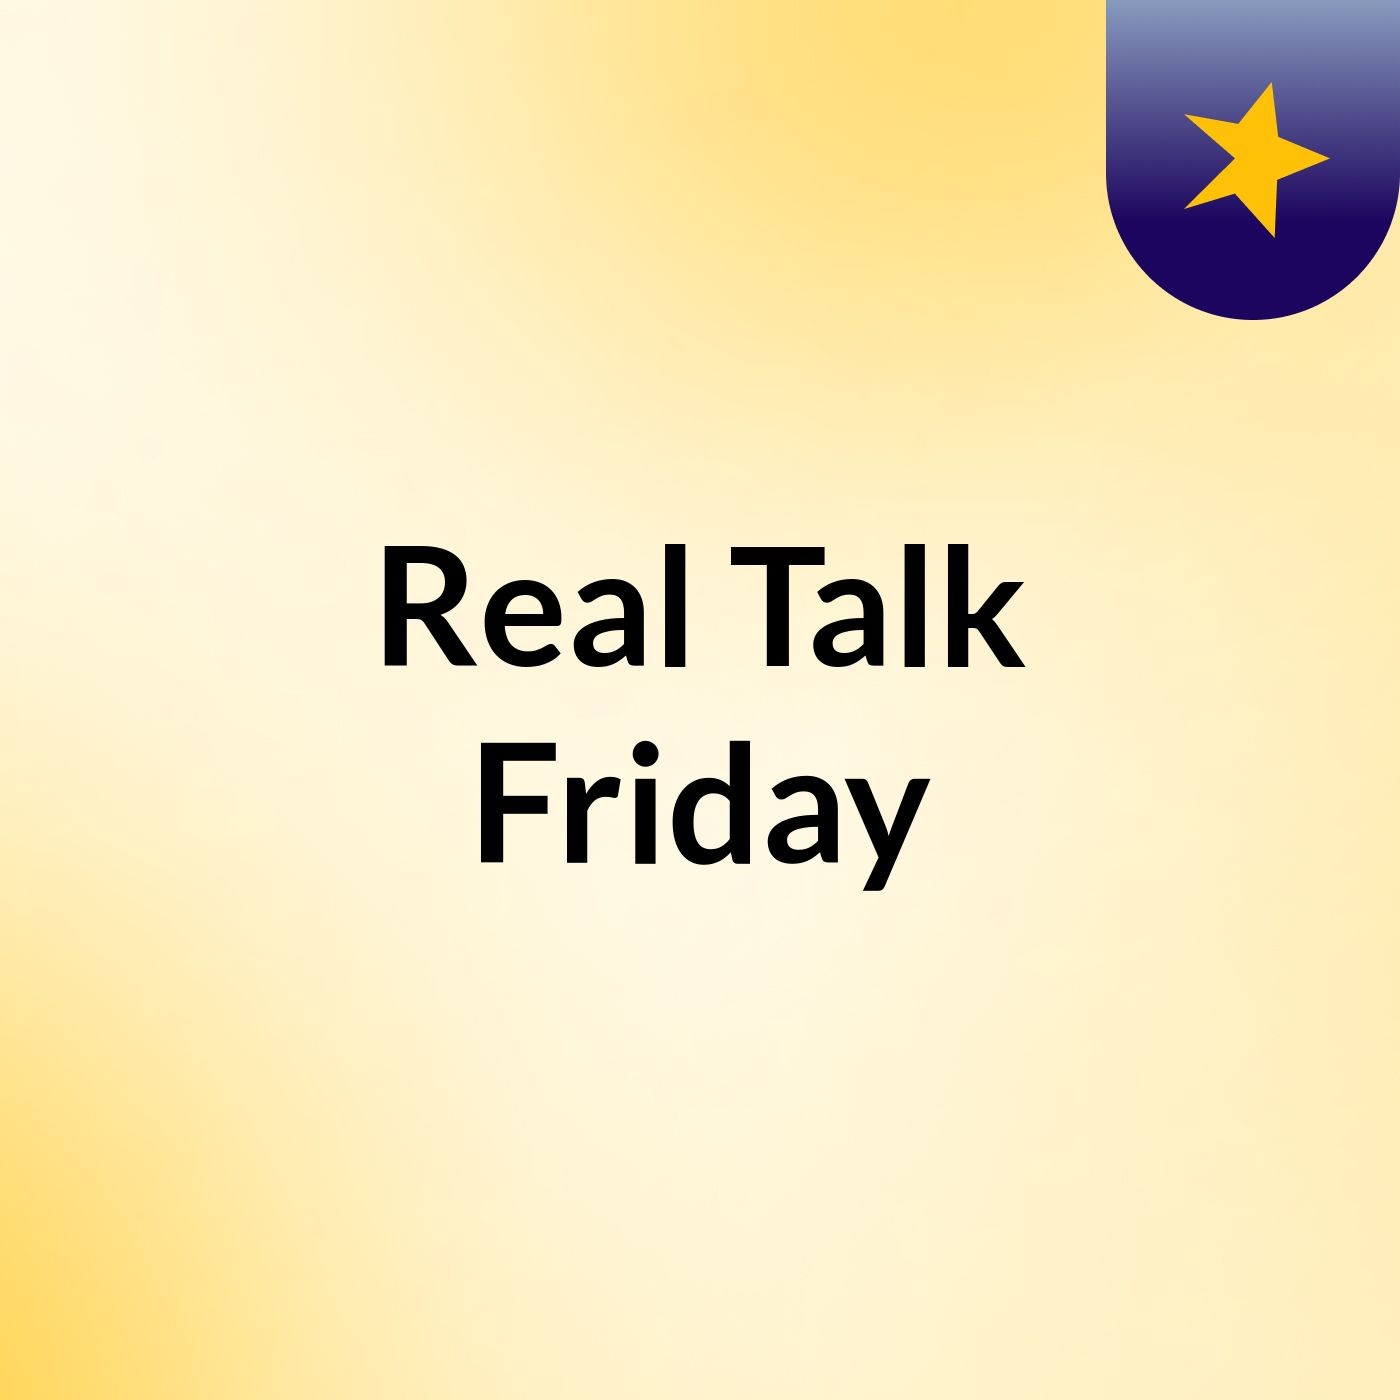 Real Talk Friday